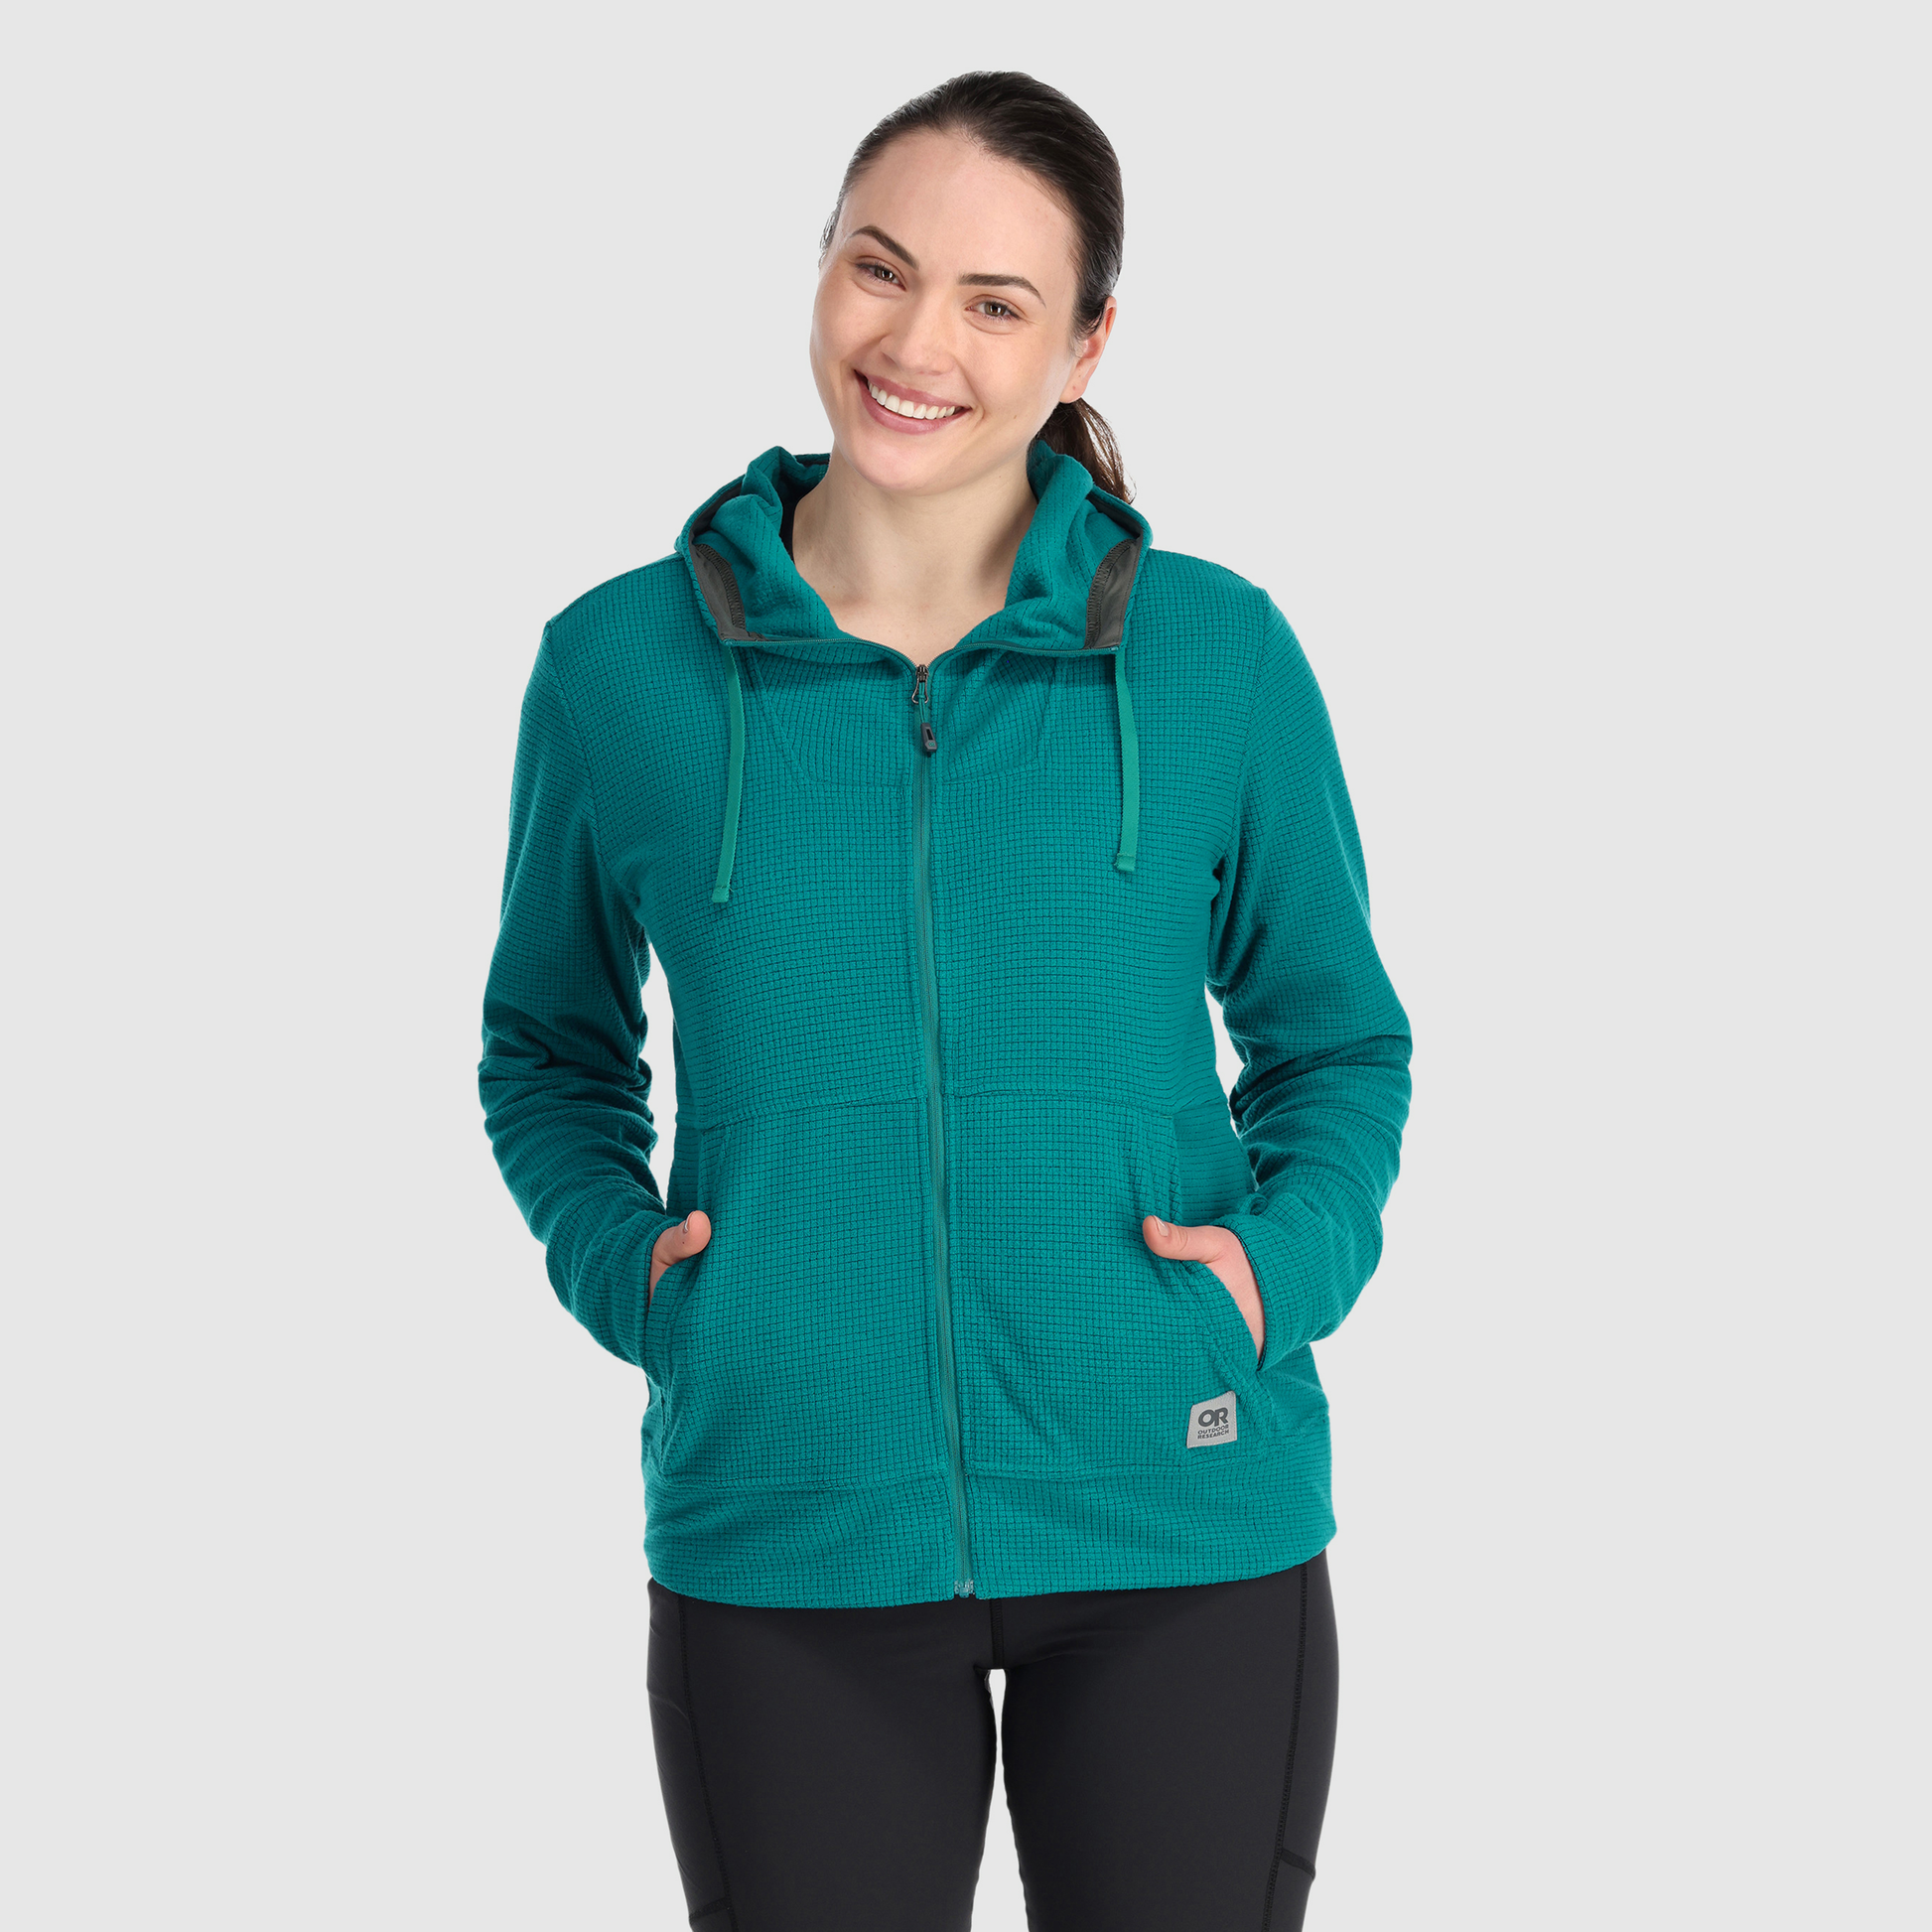 Women's Two-Tone Full Zip Fleece Casual Athletic Hoodie Jacket